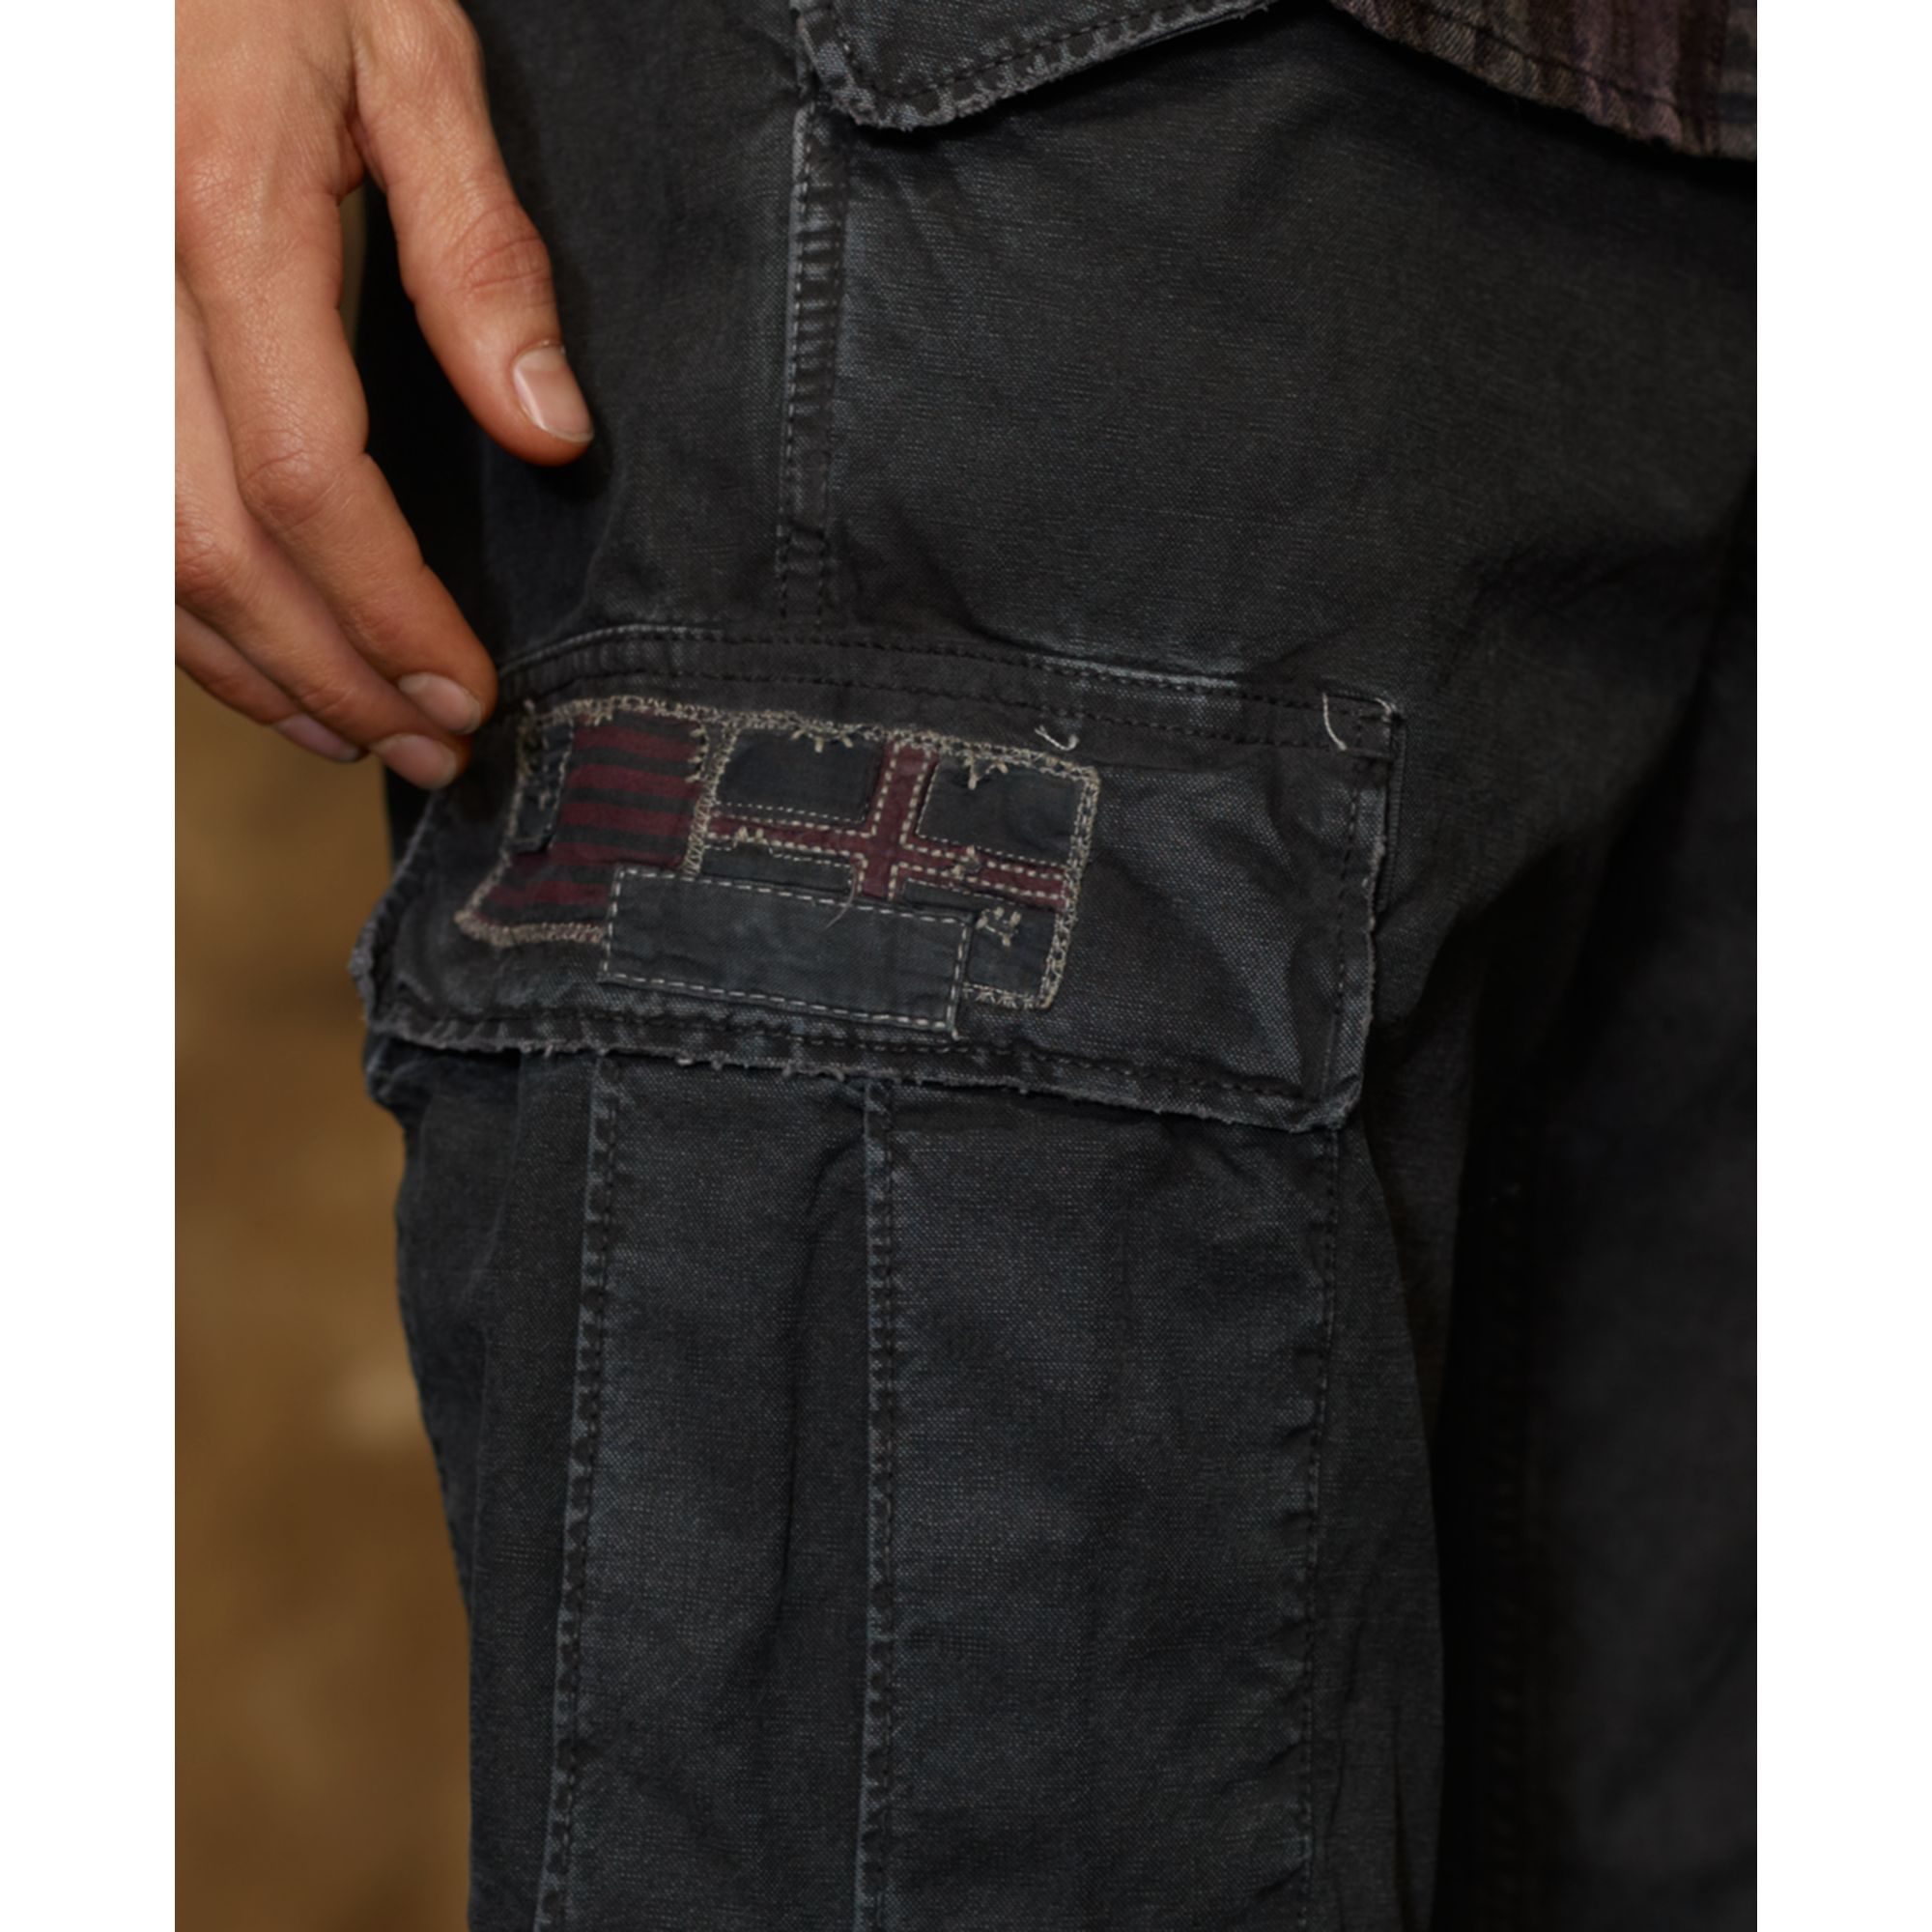 Denim & Supply Ralph Lauren Field Cargo Pants in Black Denim (Black) for  Men - Lyst